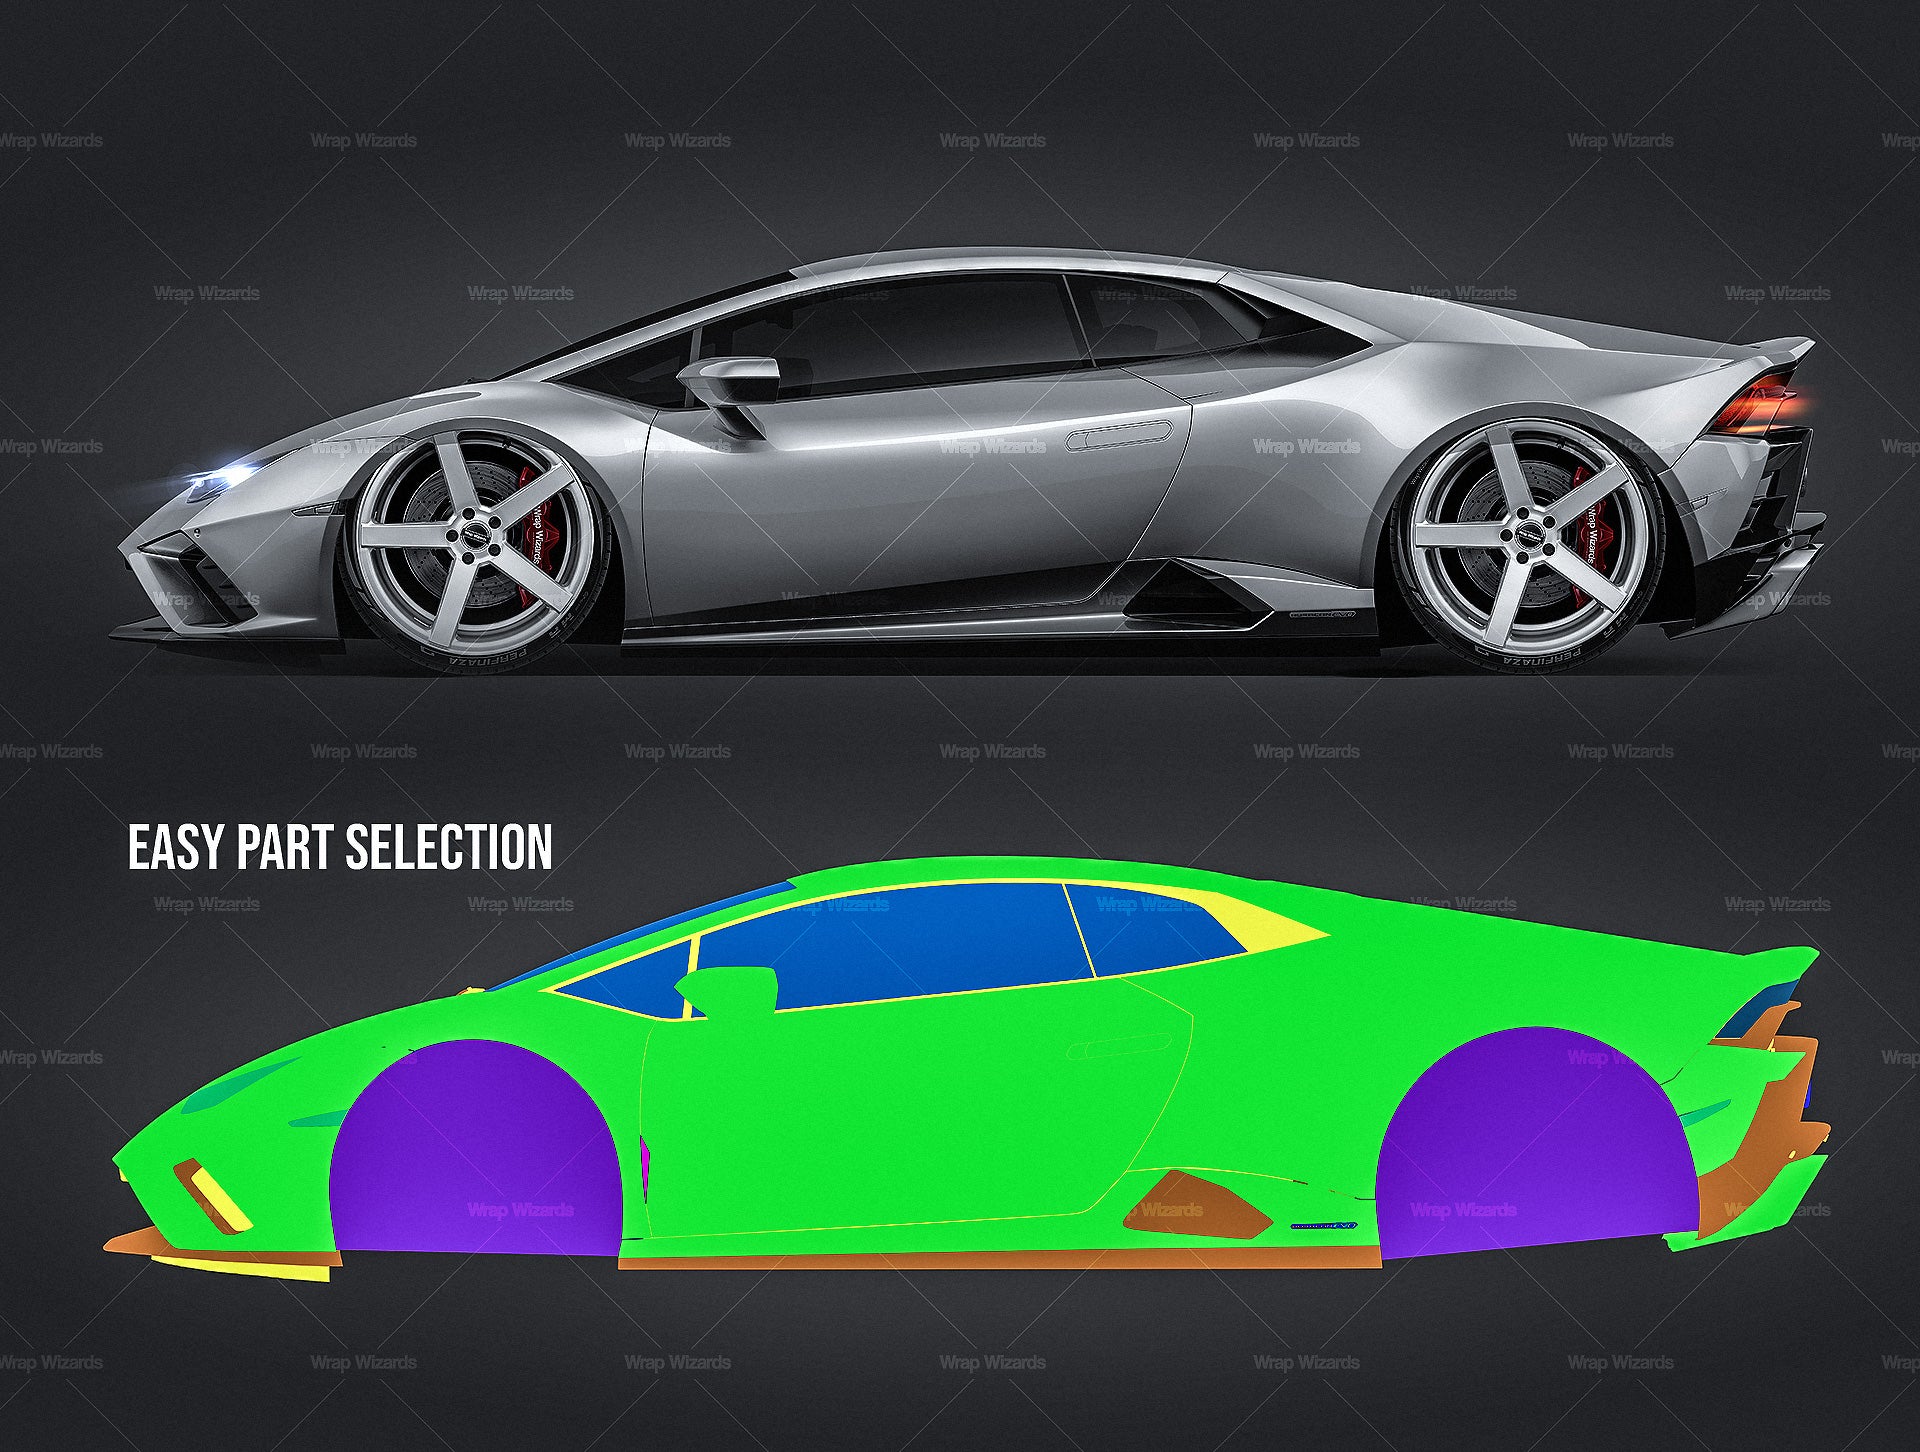 Download Lamborghini Huracan Evo Rwd 2021 - all sides Car Mockup Template.psd - Wrap-Wizards.com ...